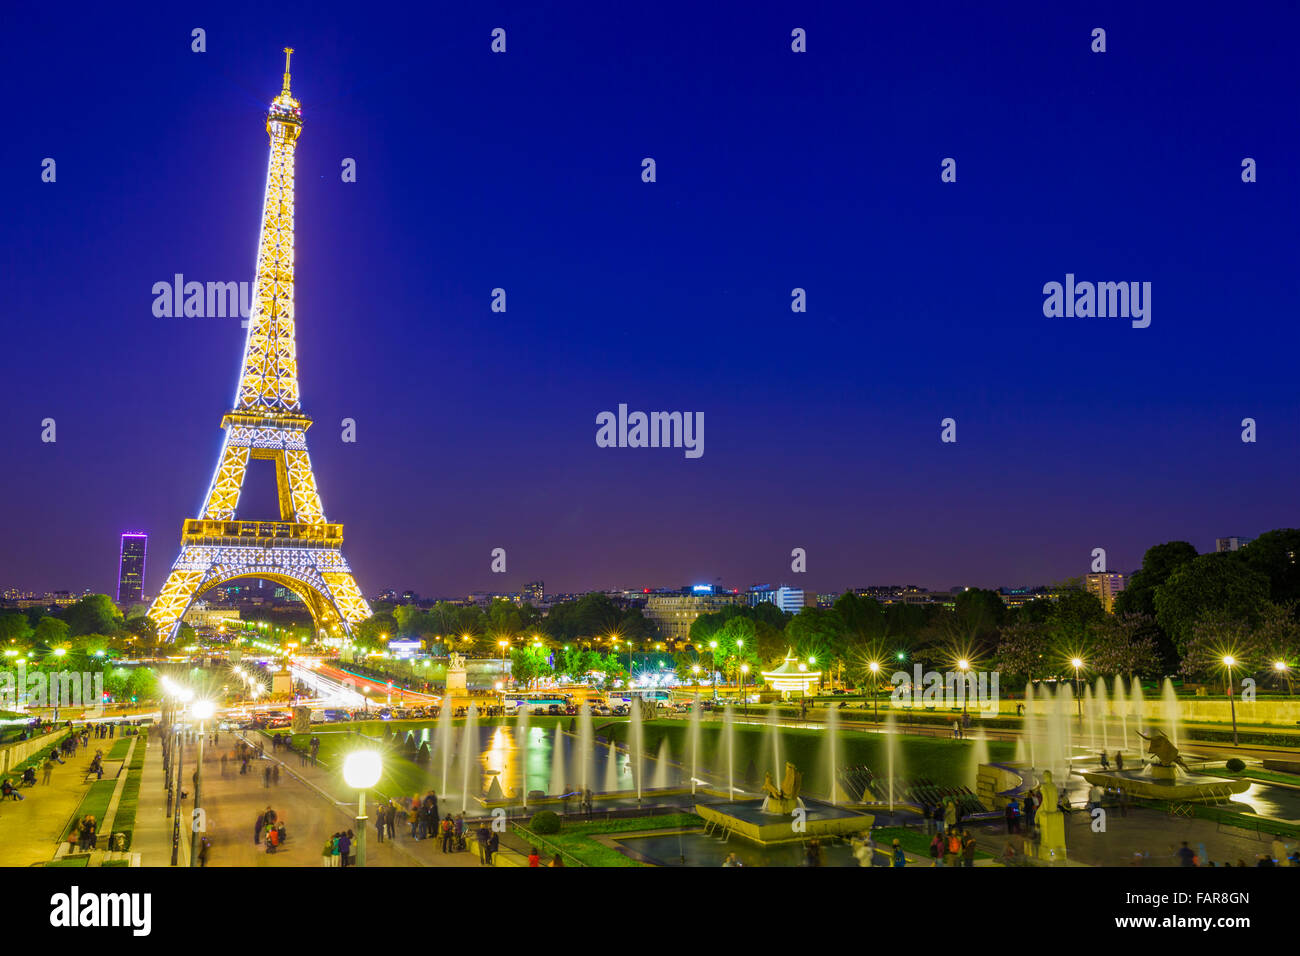 Eiffel Tower in evening seen from Trocadéro Gardens at night, Paris Stock Photo